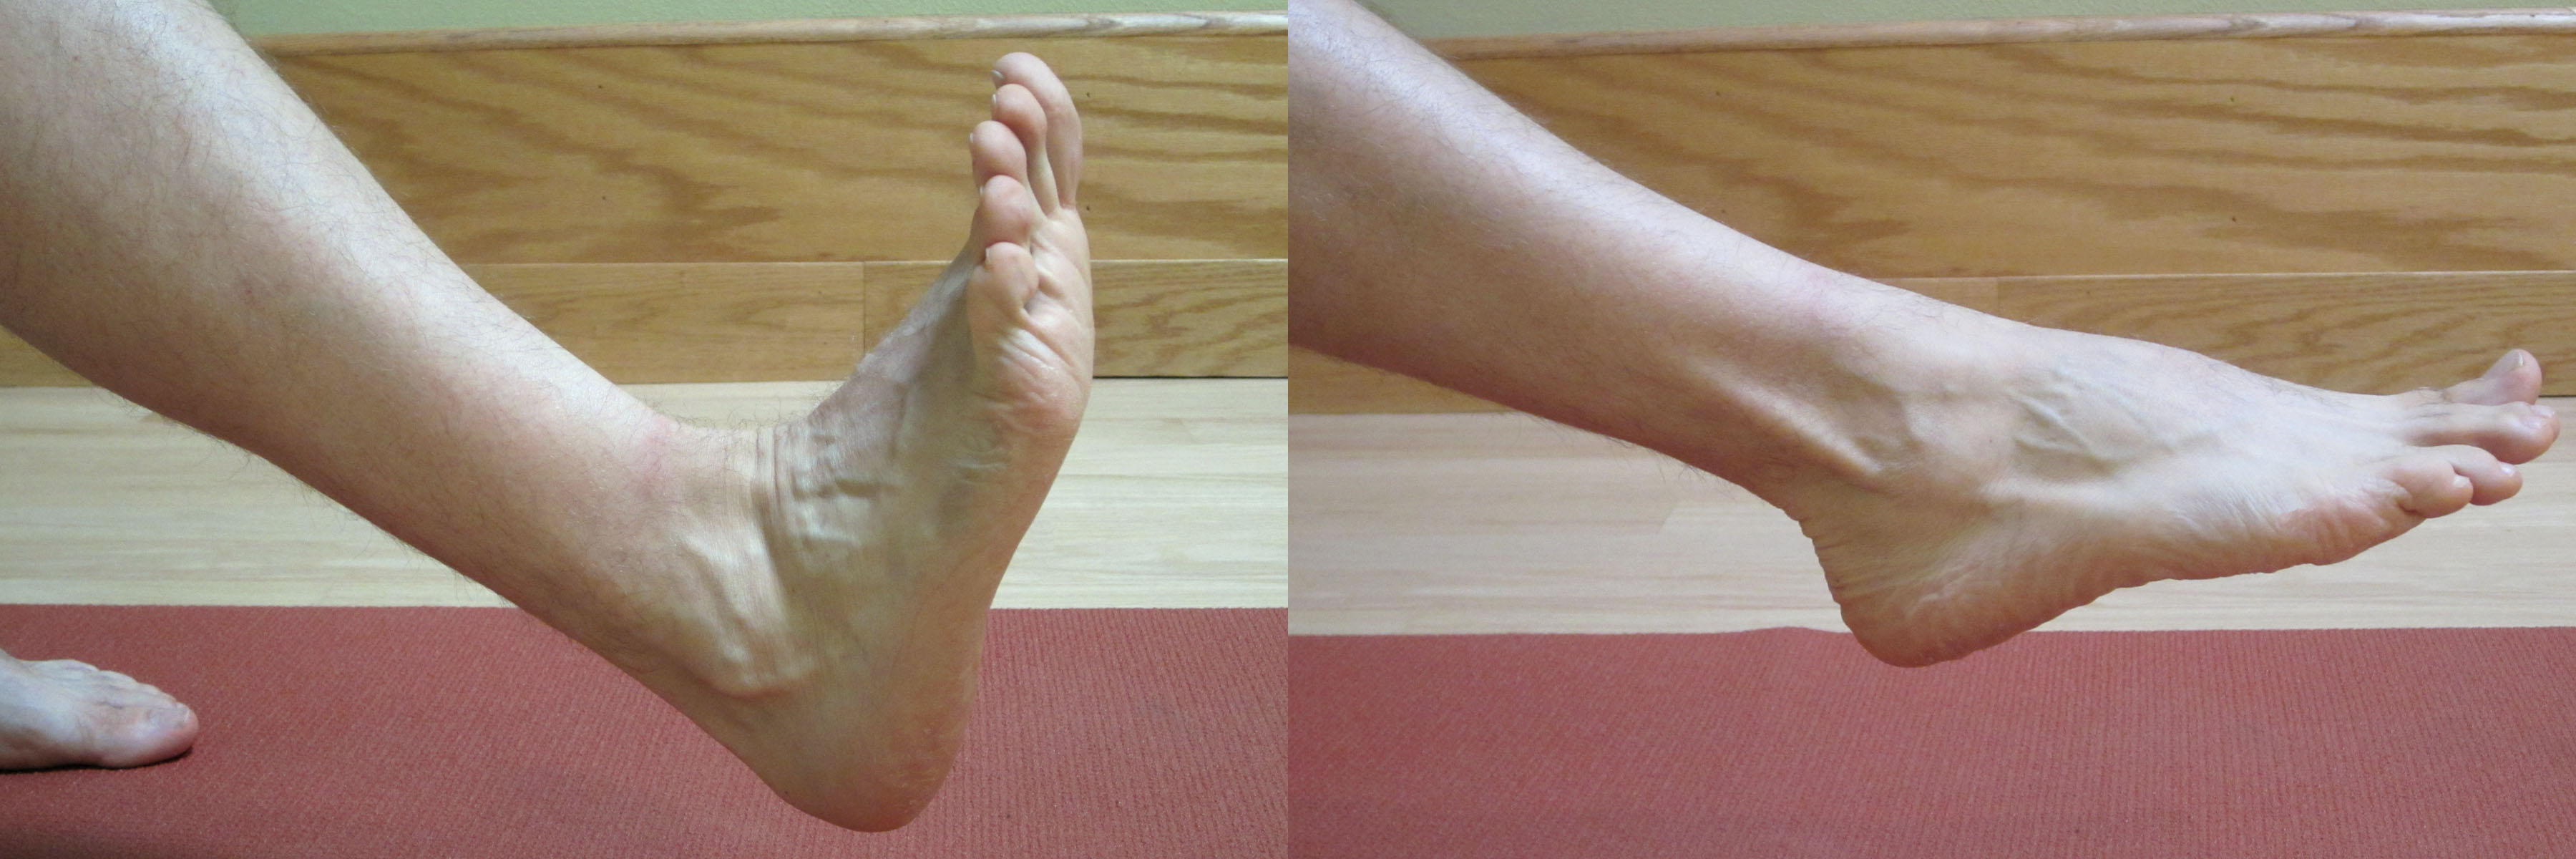 Ankle Sprains – Rehabilitation (Part III of III)